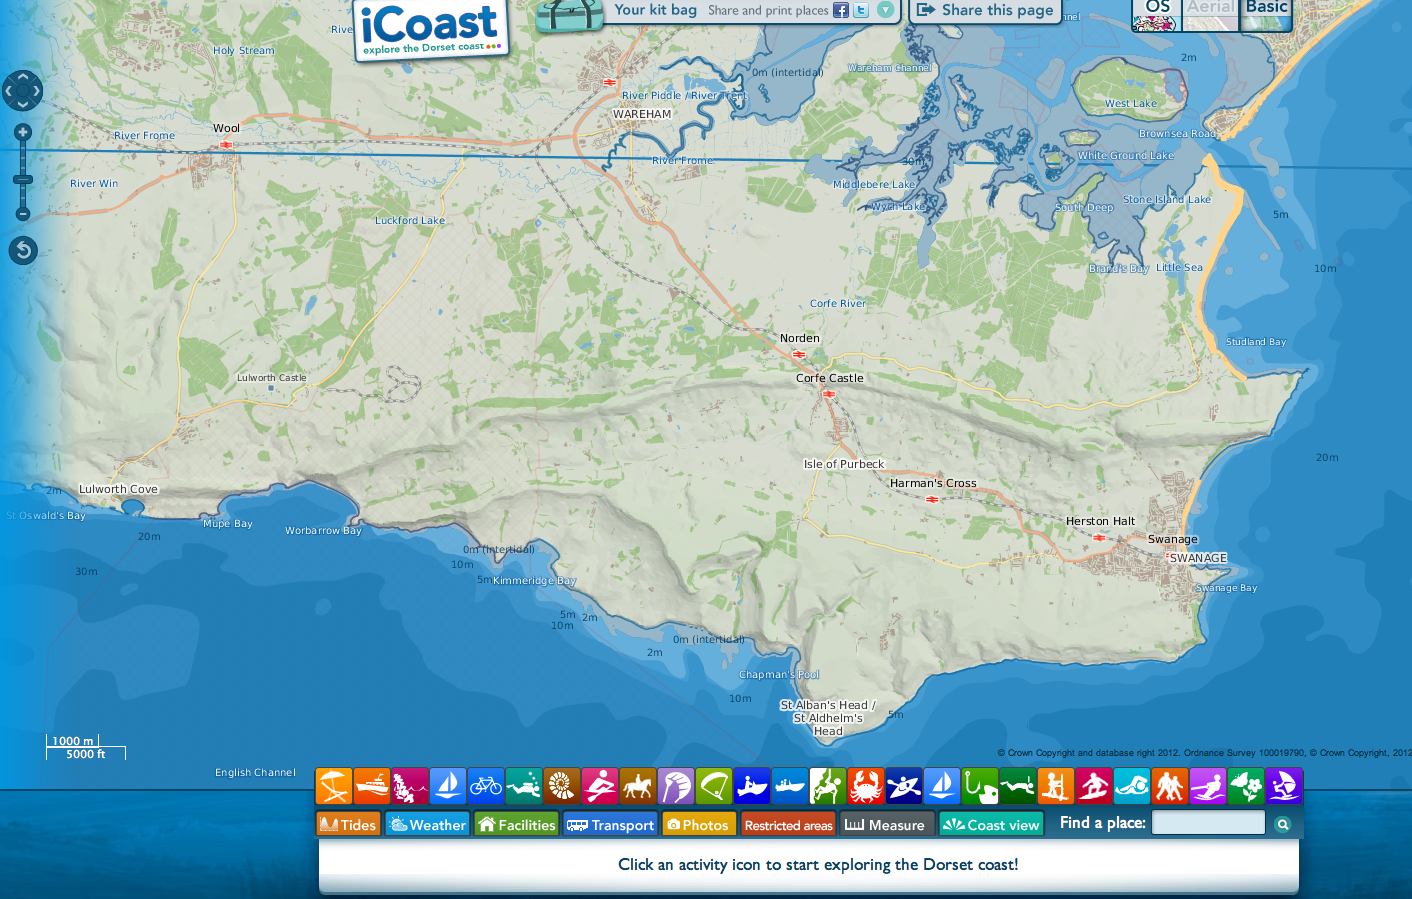 iCoast app based on Open Data from Ordnance Survey